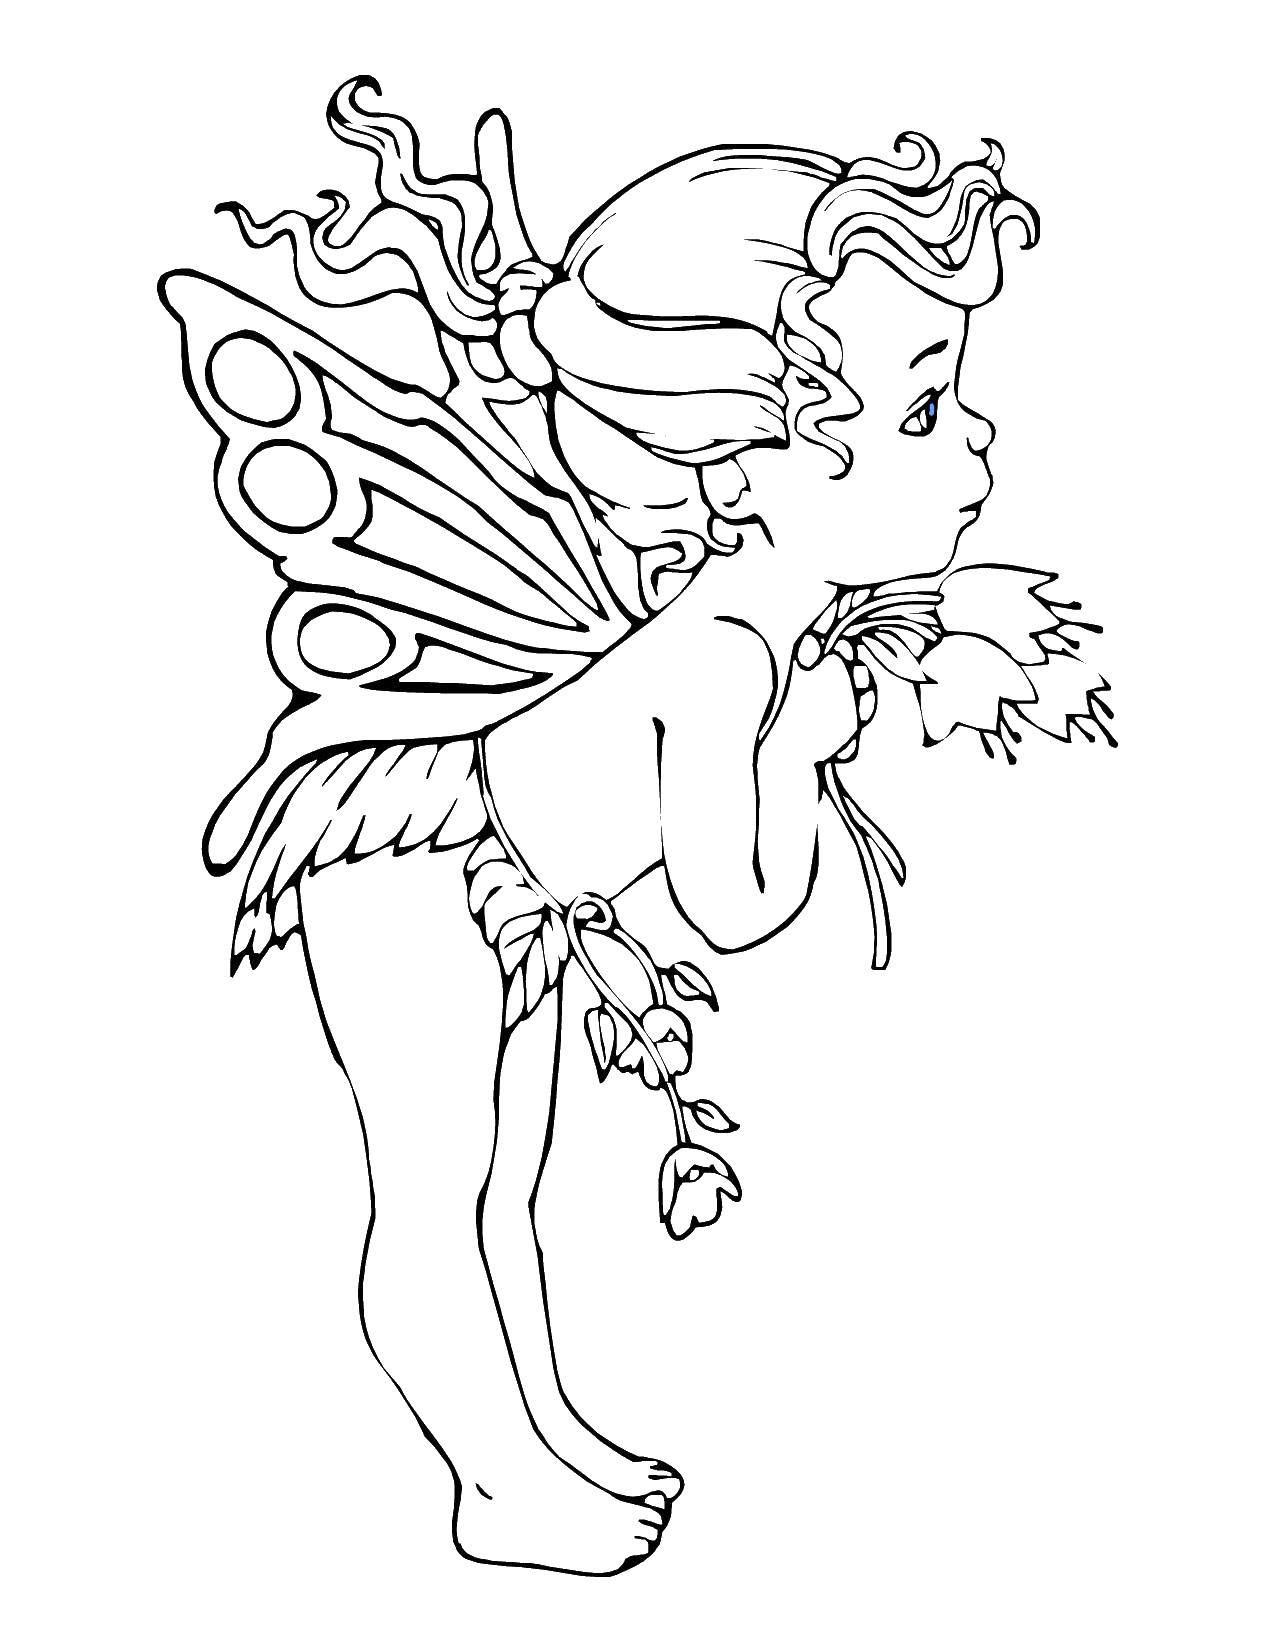 Название: Раскраска Девочка фея с цветочками. Категория: дети. Теги: дети, девочка, цветочки.